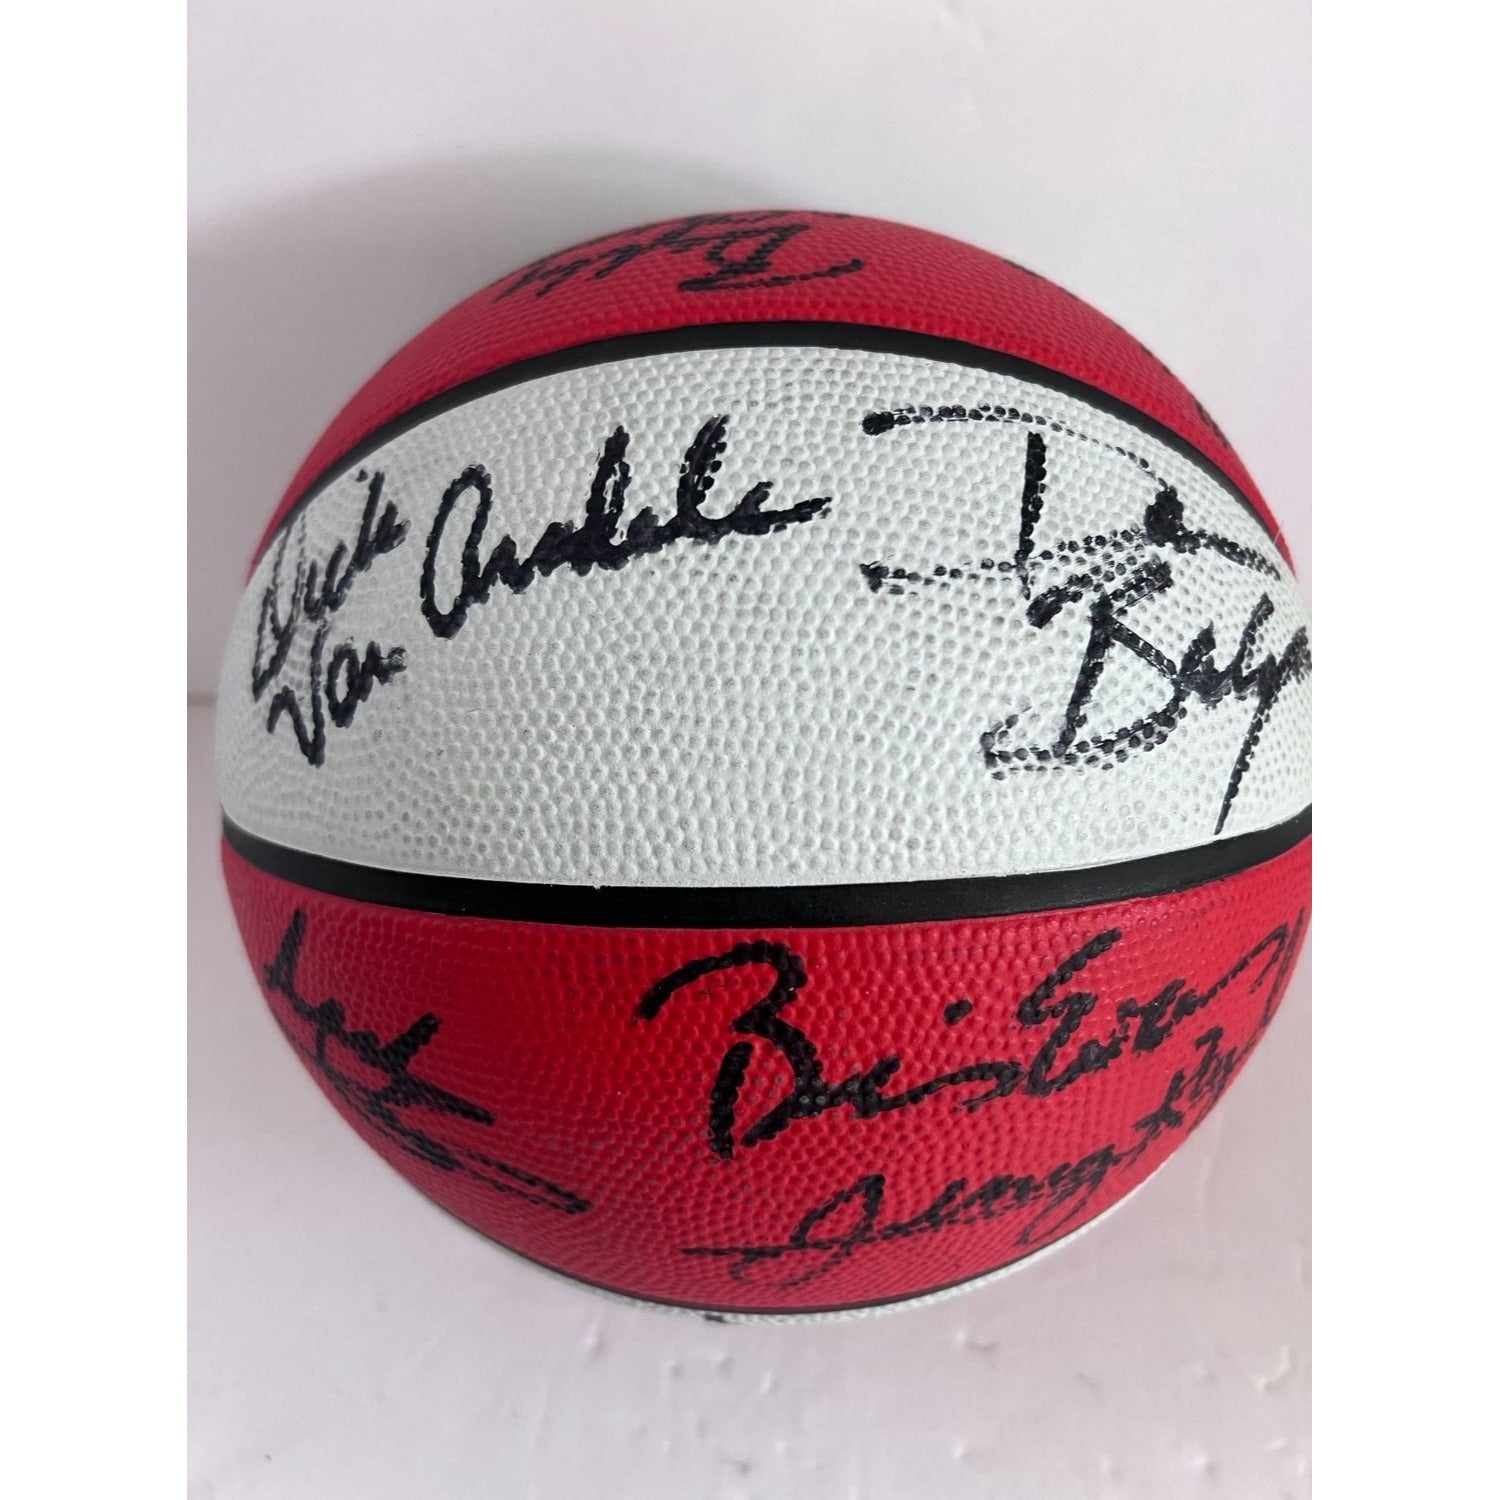 Indiana Hoosiers Bobby Knight Isiah Thomas Dick Van Arsdale Calbert Cheney full size basketball signed